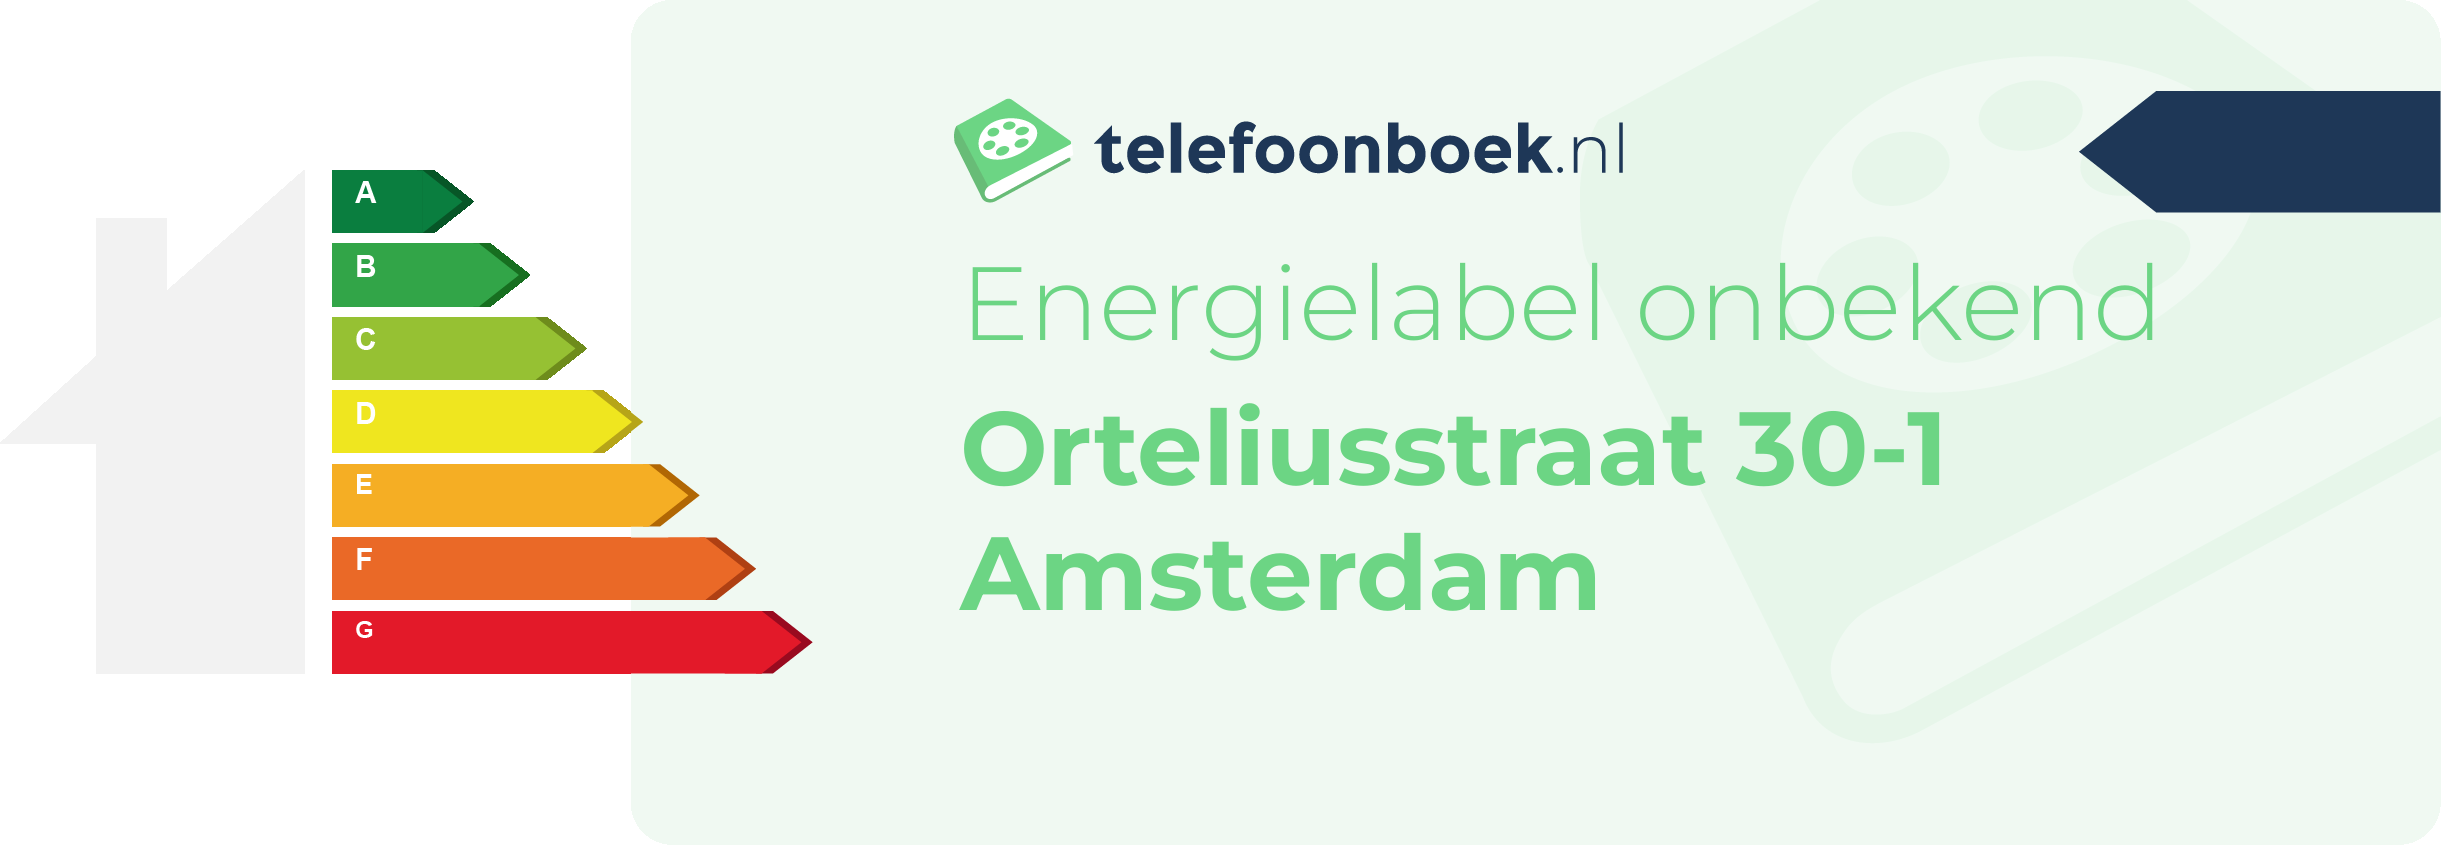 Energielabel Orteliusstraat 30-1 Amsterdam